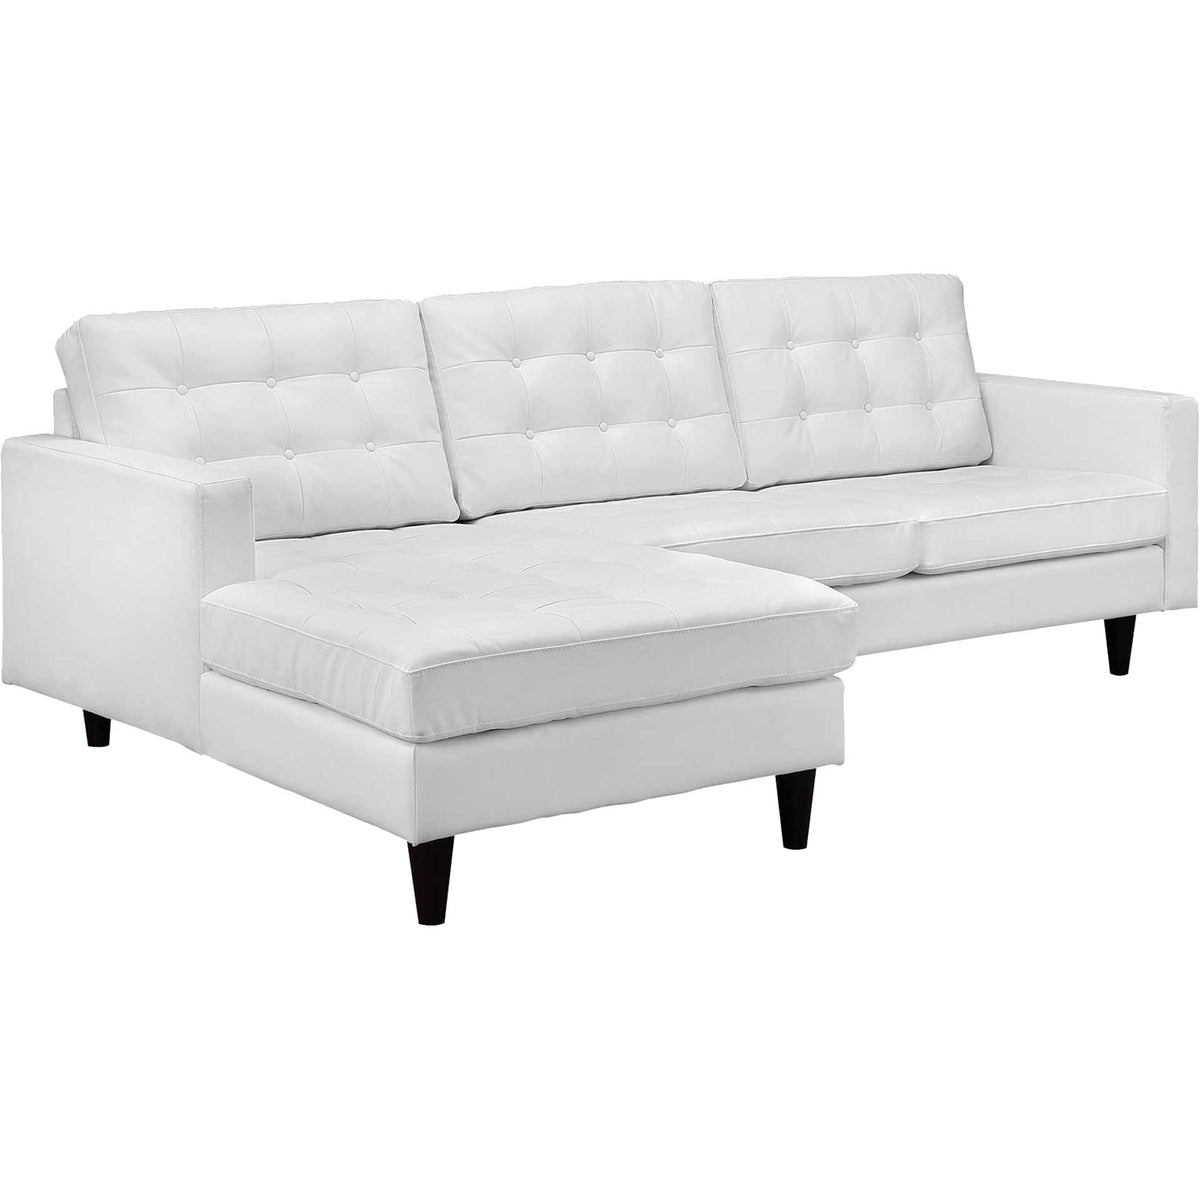 Era Leather Sectional Sofa White